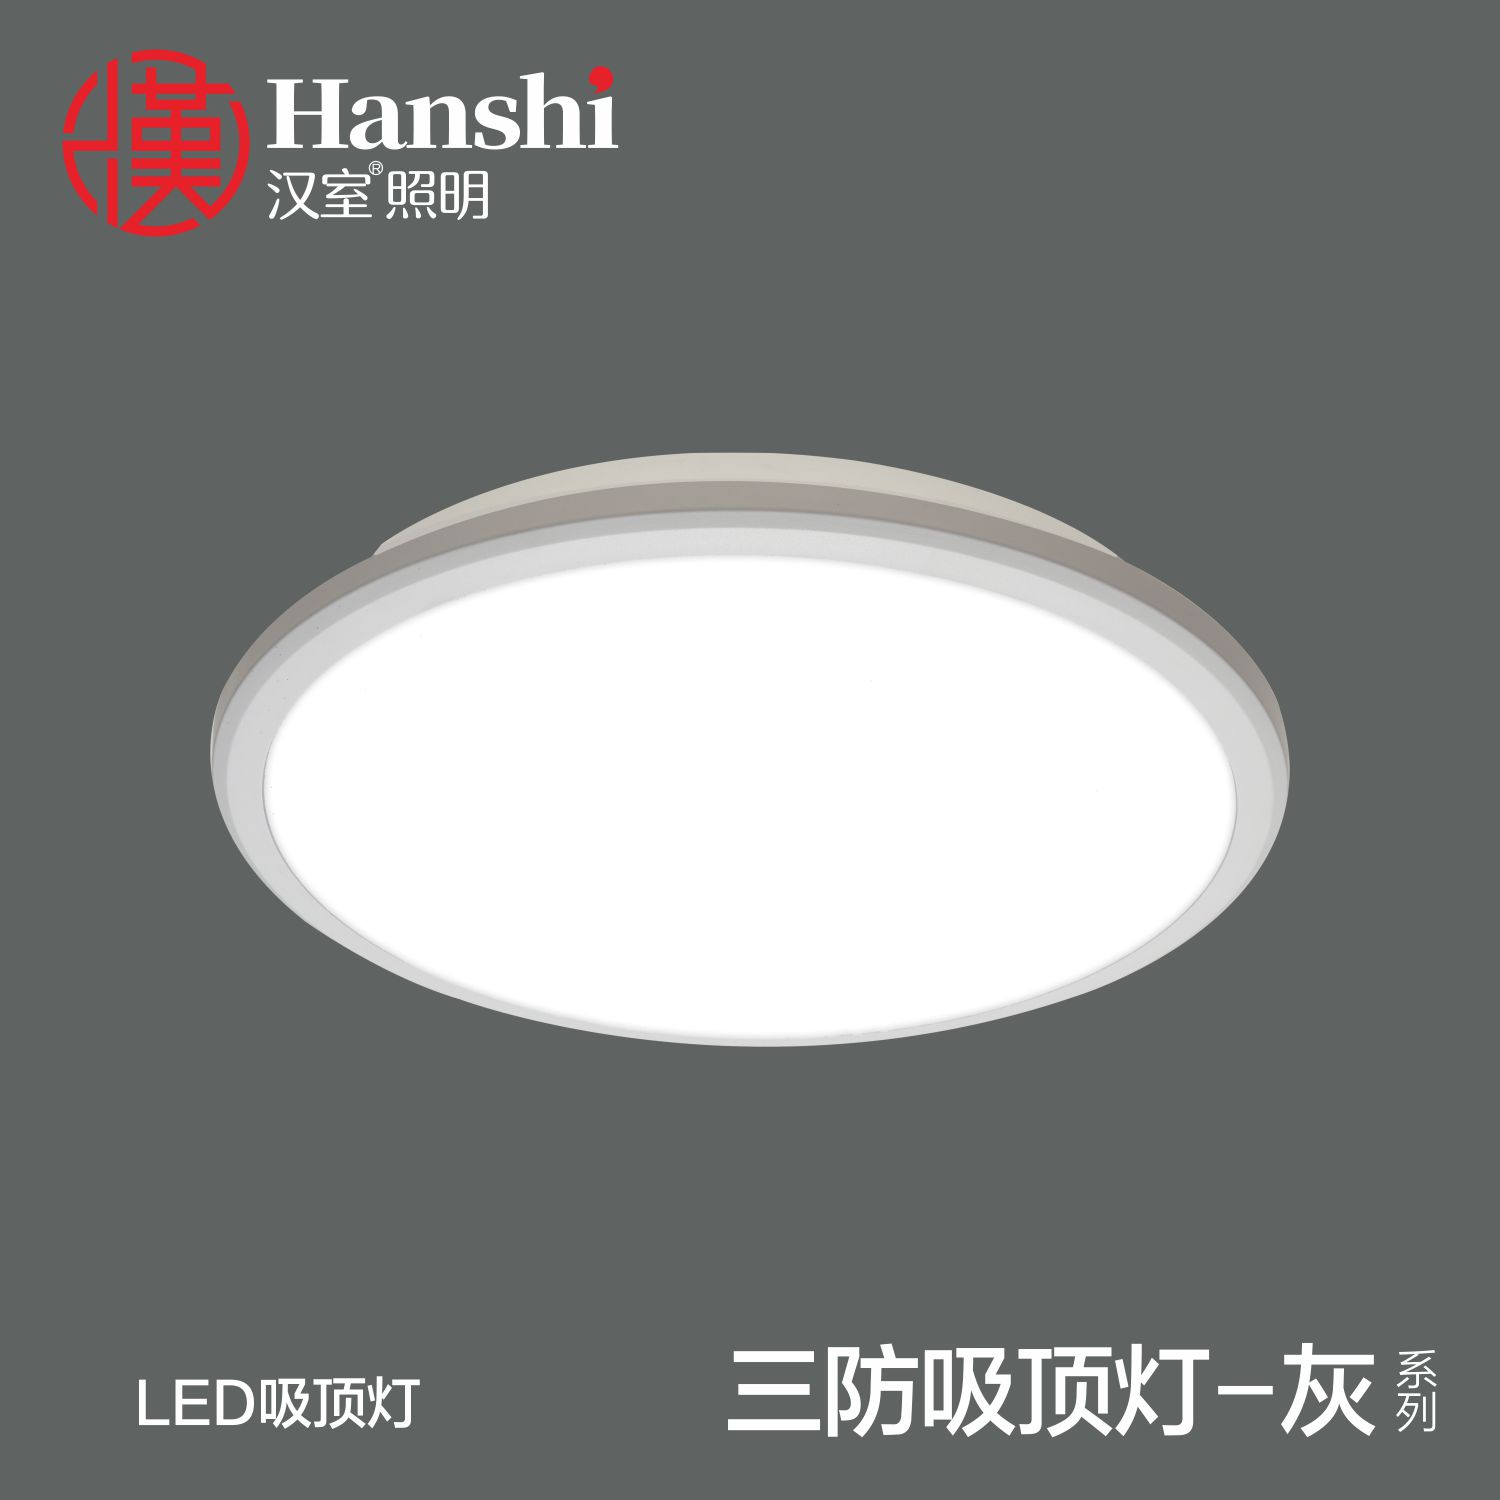 LED grey ceiling lamp